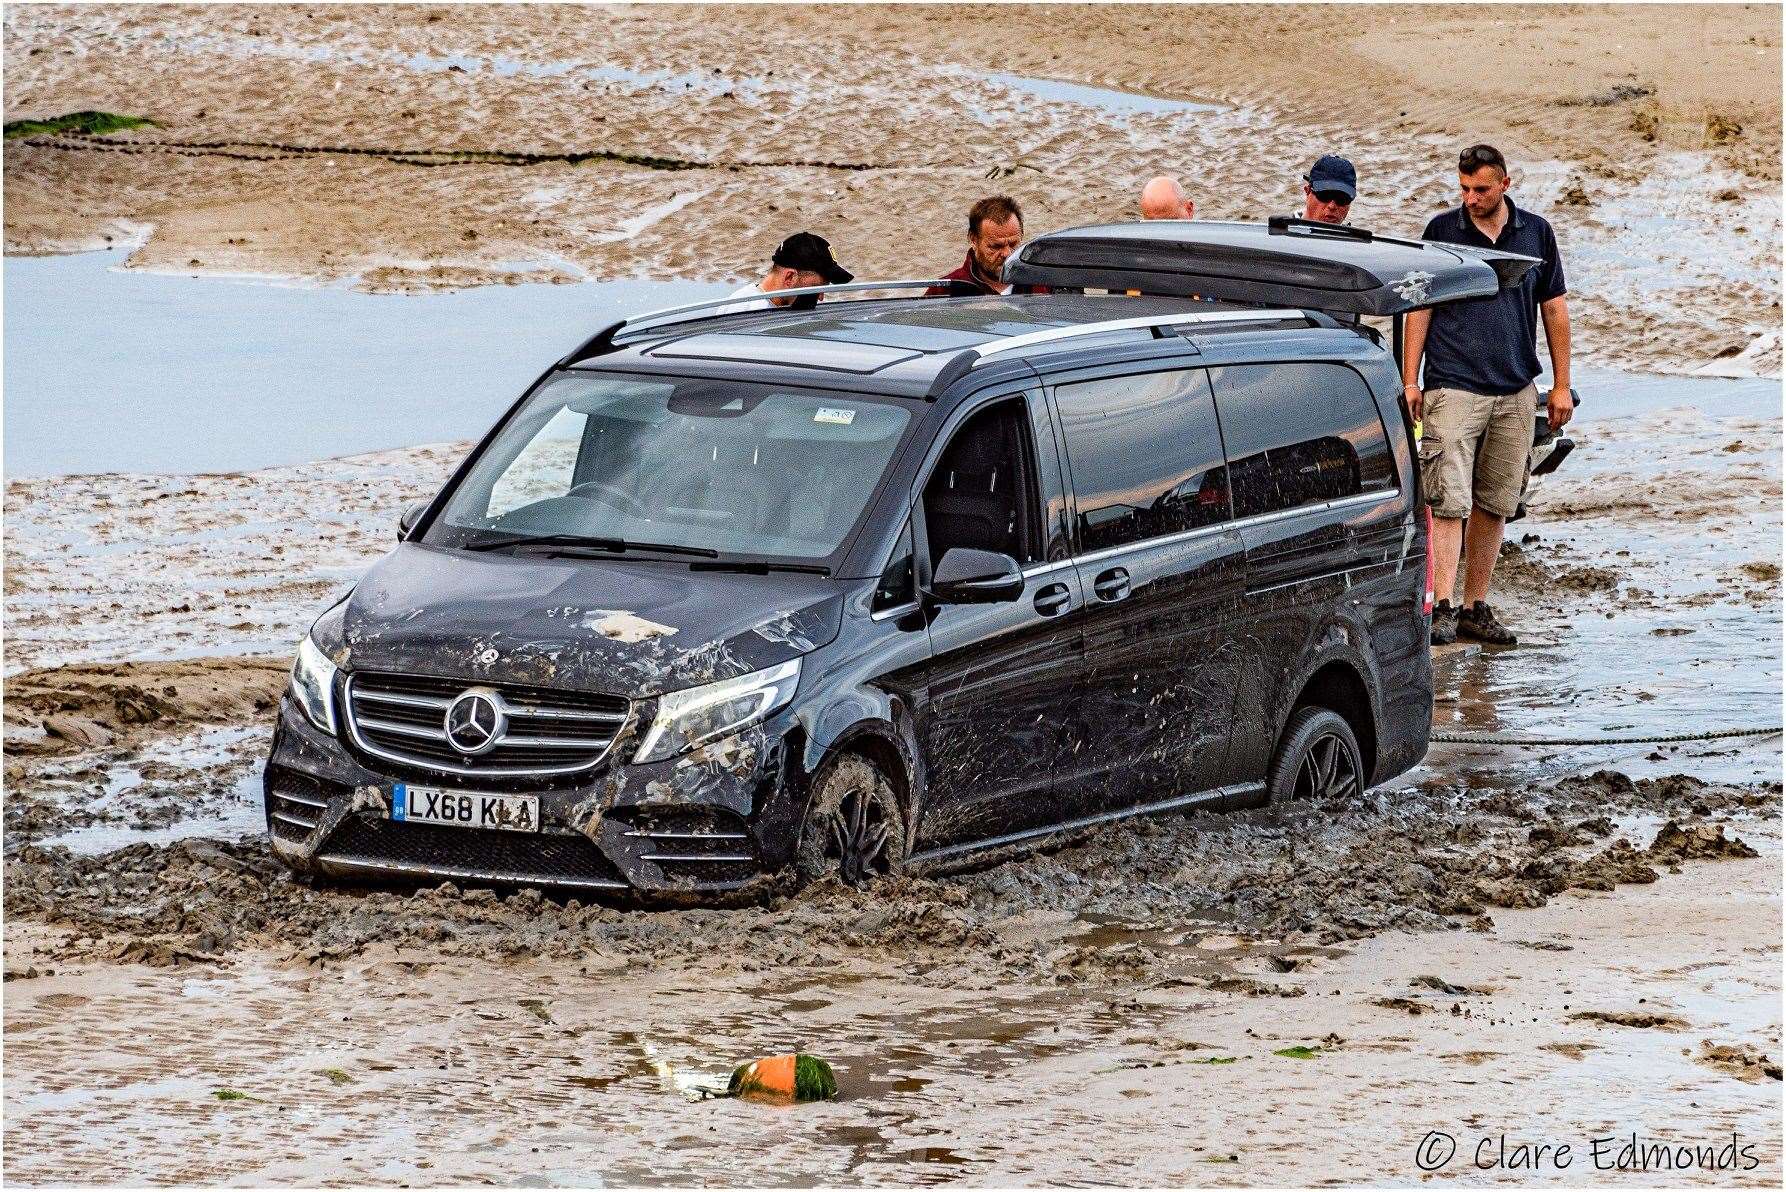 The van became stuck in Folkestone Harbour. Photo credit: Clare Edmonds